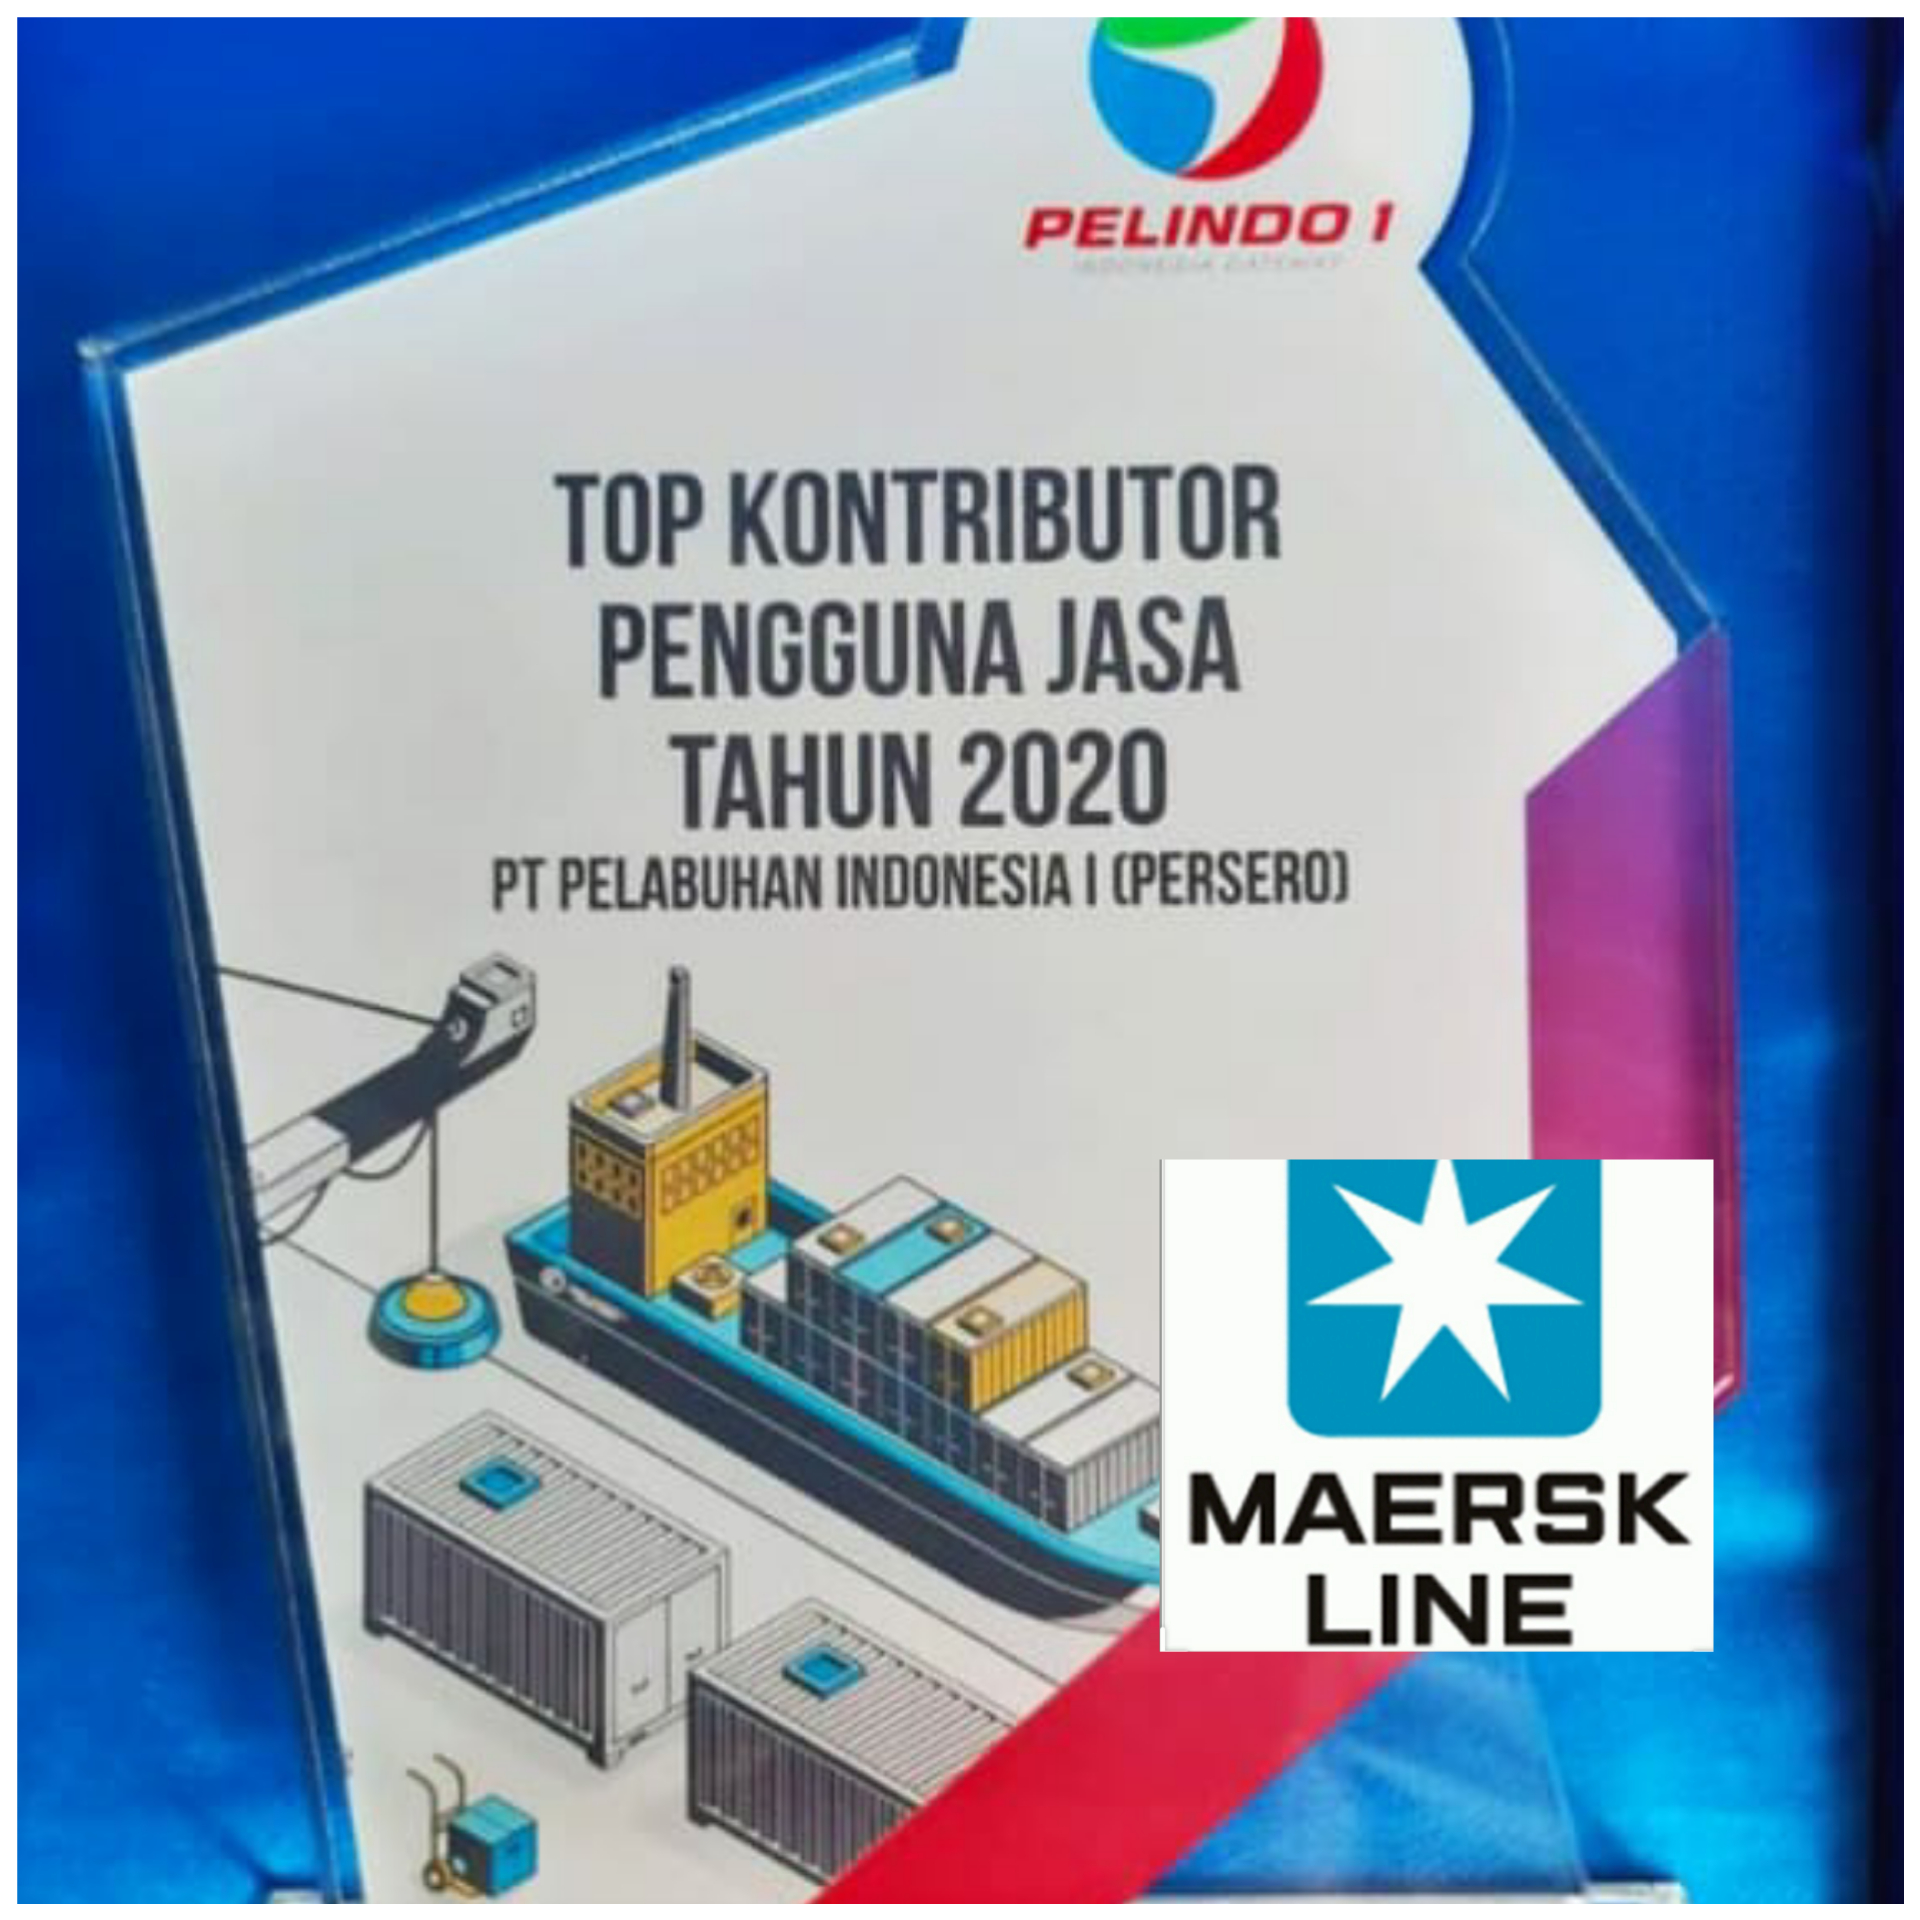 Ini Kata GM TPK Belawan Terkait  Pelindo l Berikan Penghargaan Pada Maersk line PBP Disebut Keliru